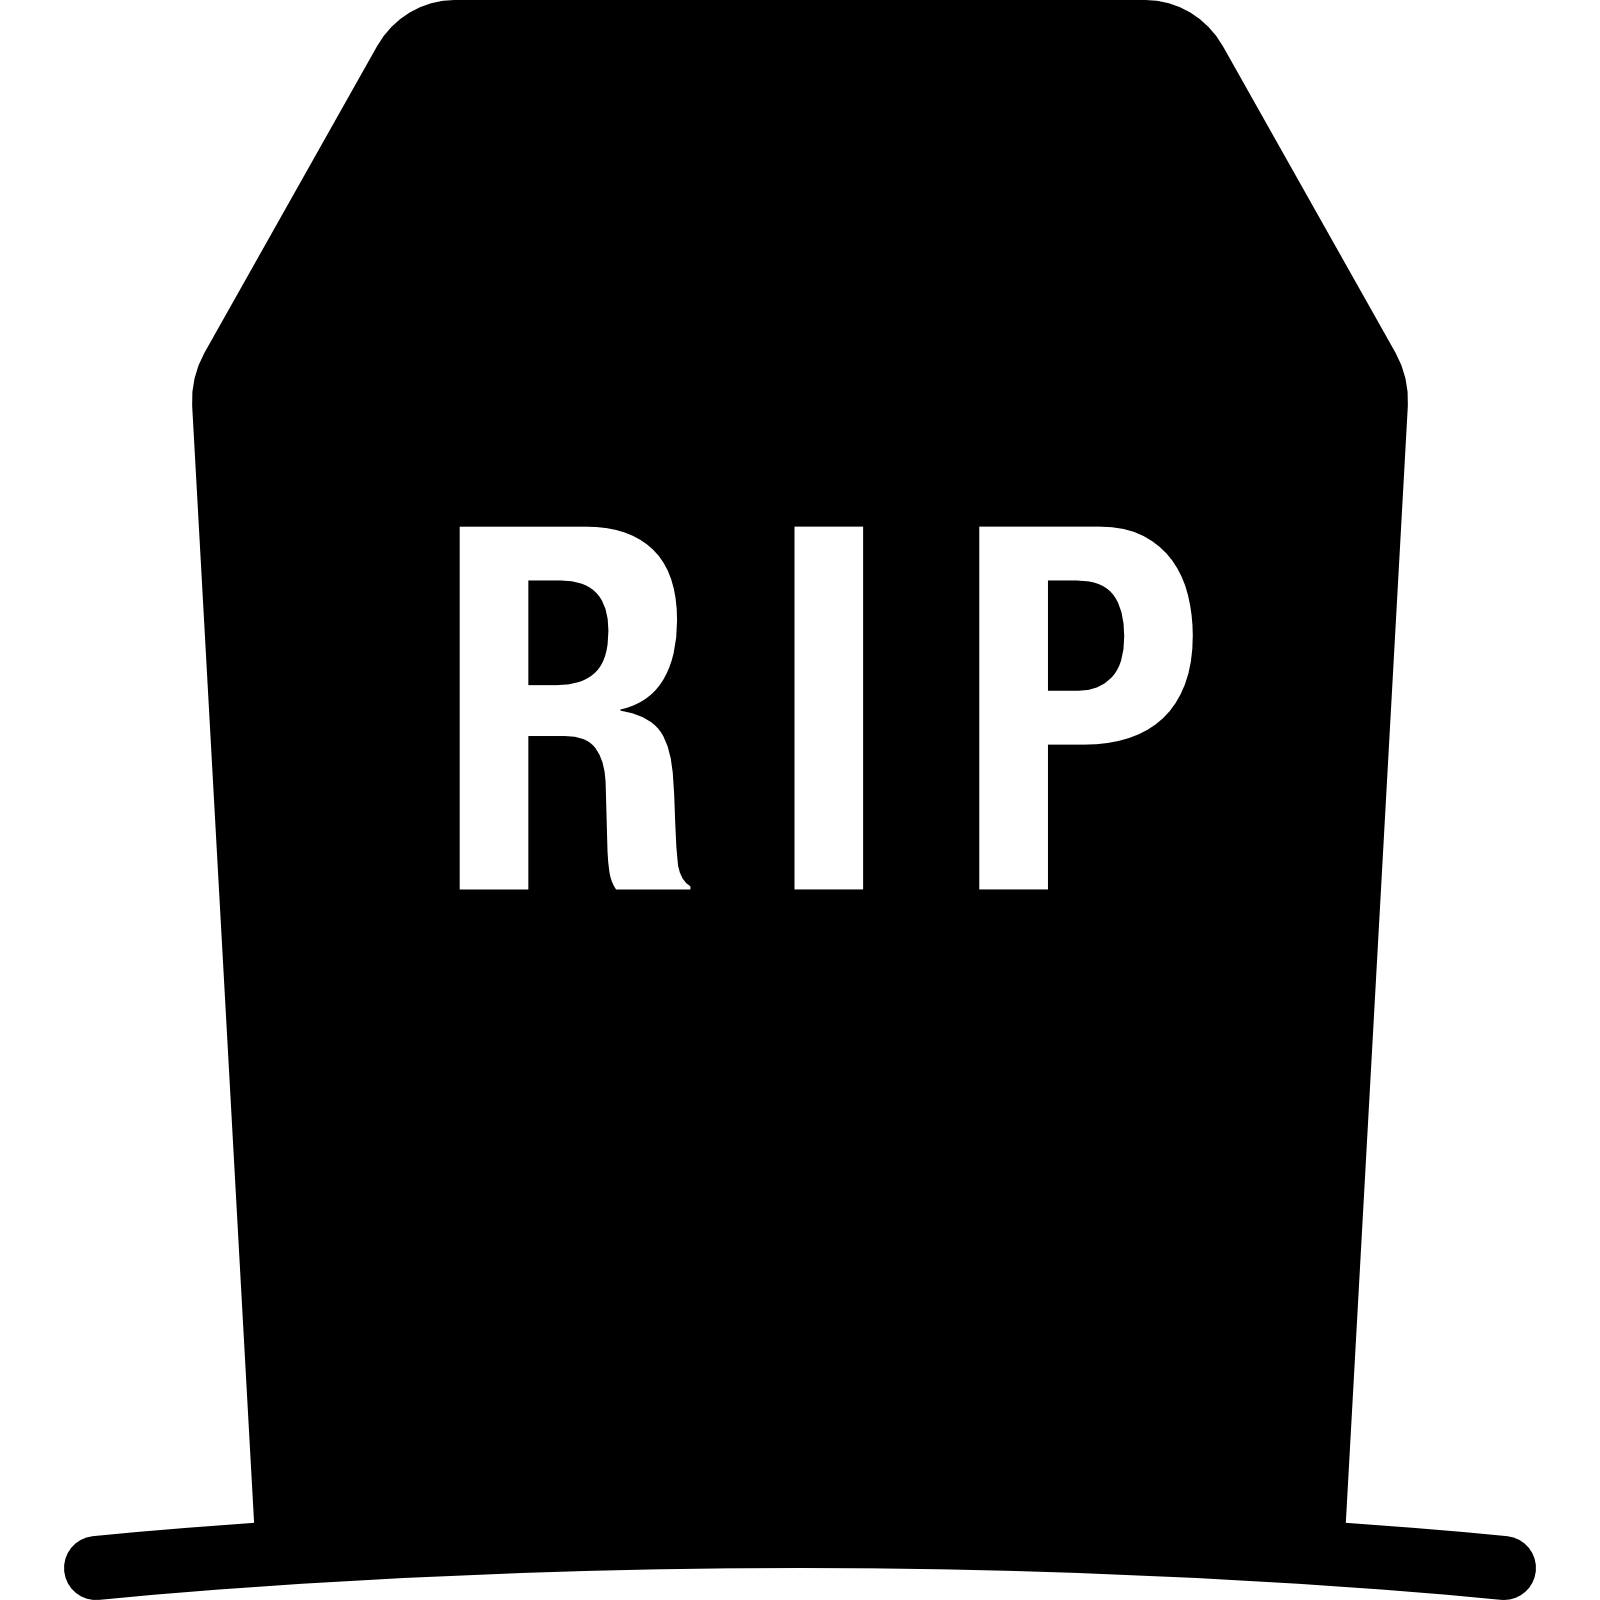 Headstone rest in peace